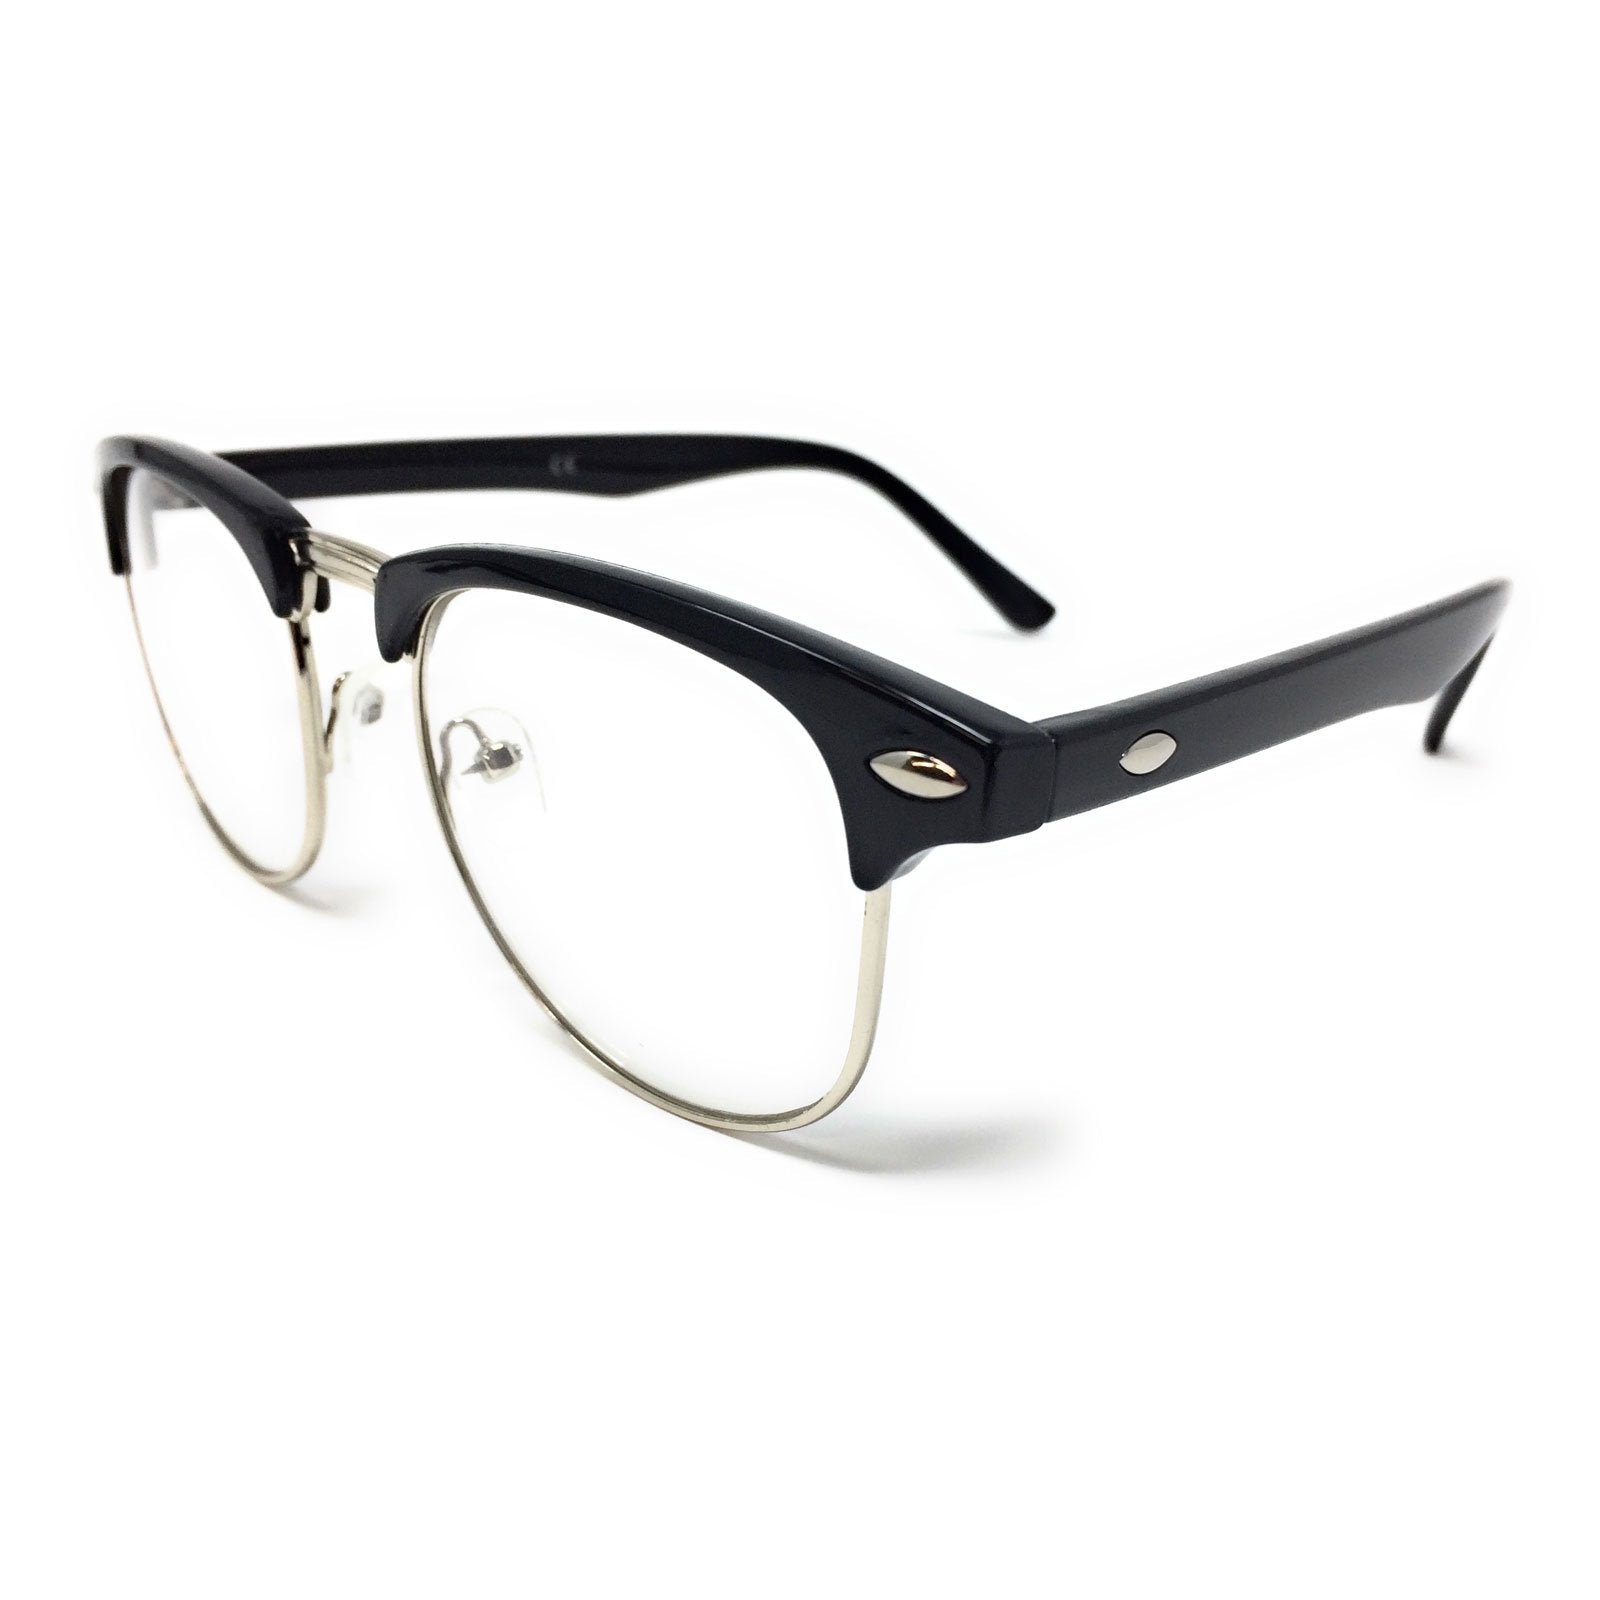 Wholesale 1950s Half Rim Clear Lens Glasses - Black Frame